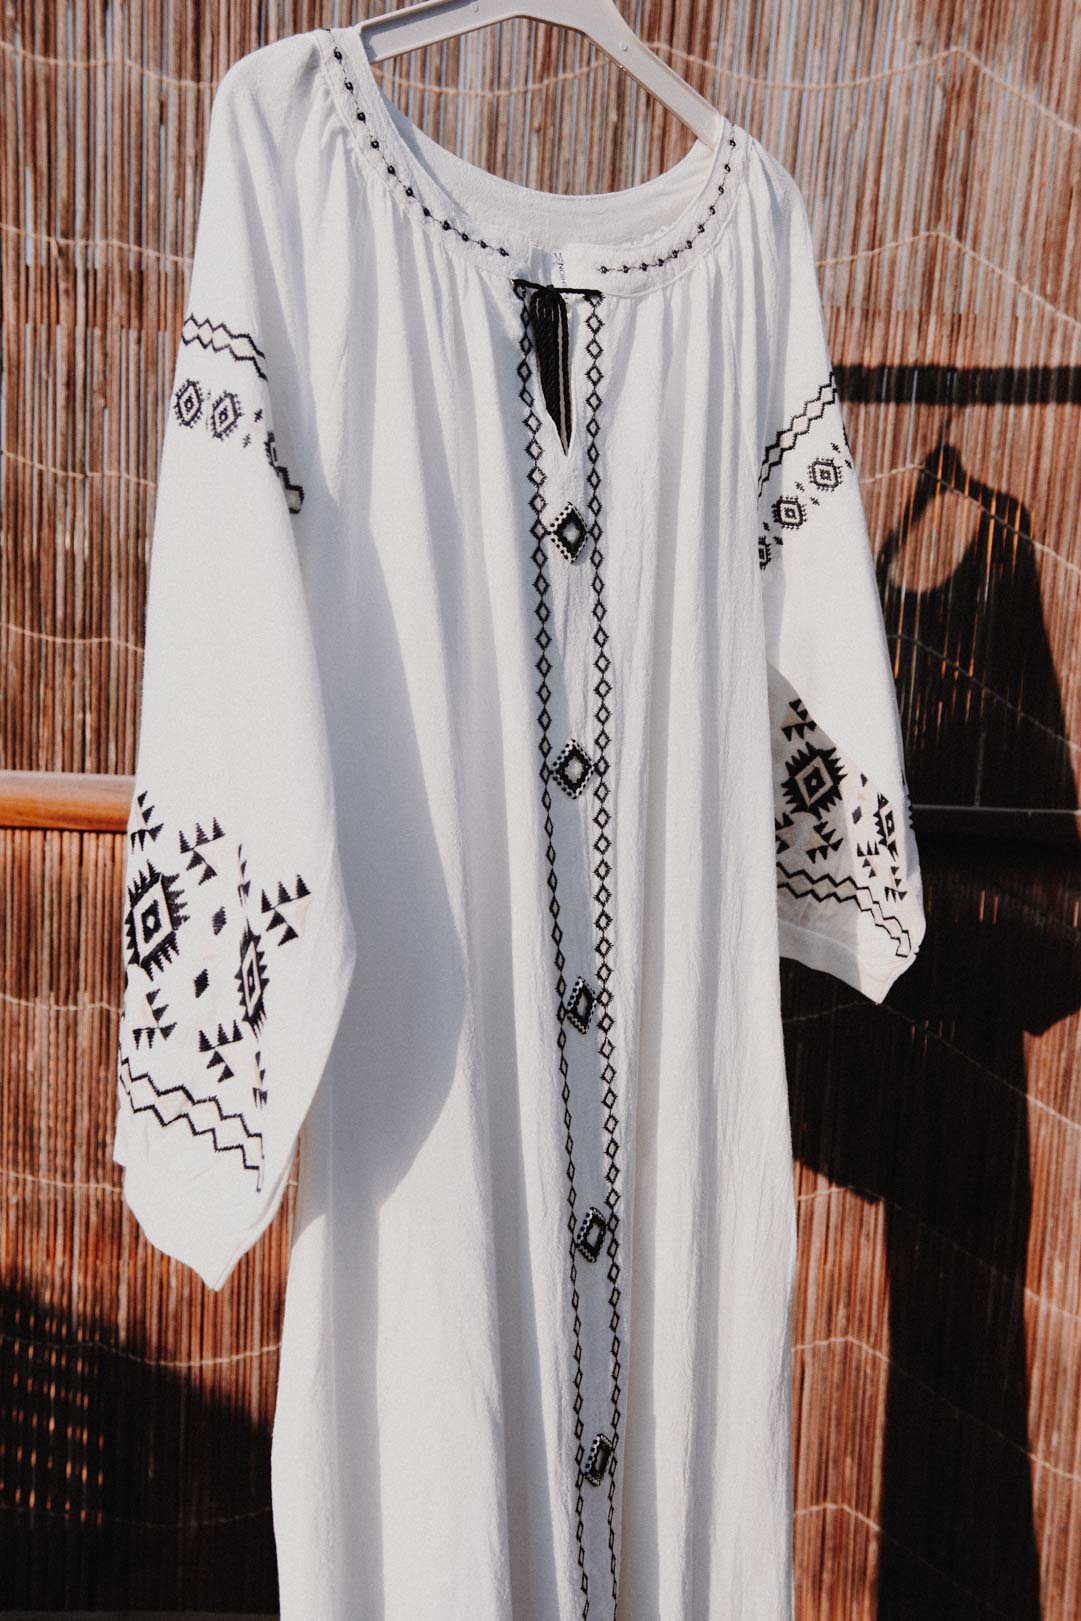 Casual long white Dress with tassel neck (Handmade Customized) - SixtyKey new model design Dubai fashion style 2021 best price